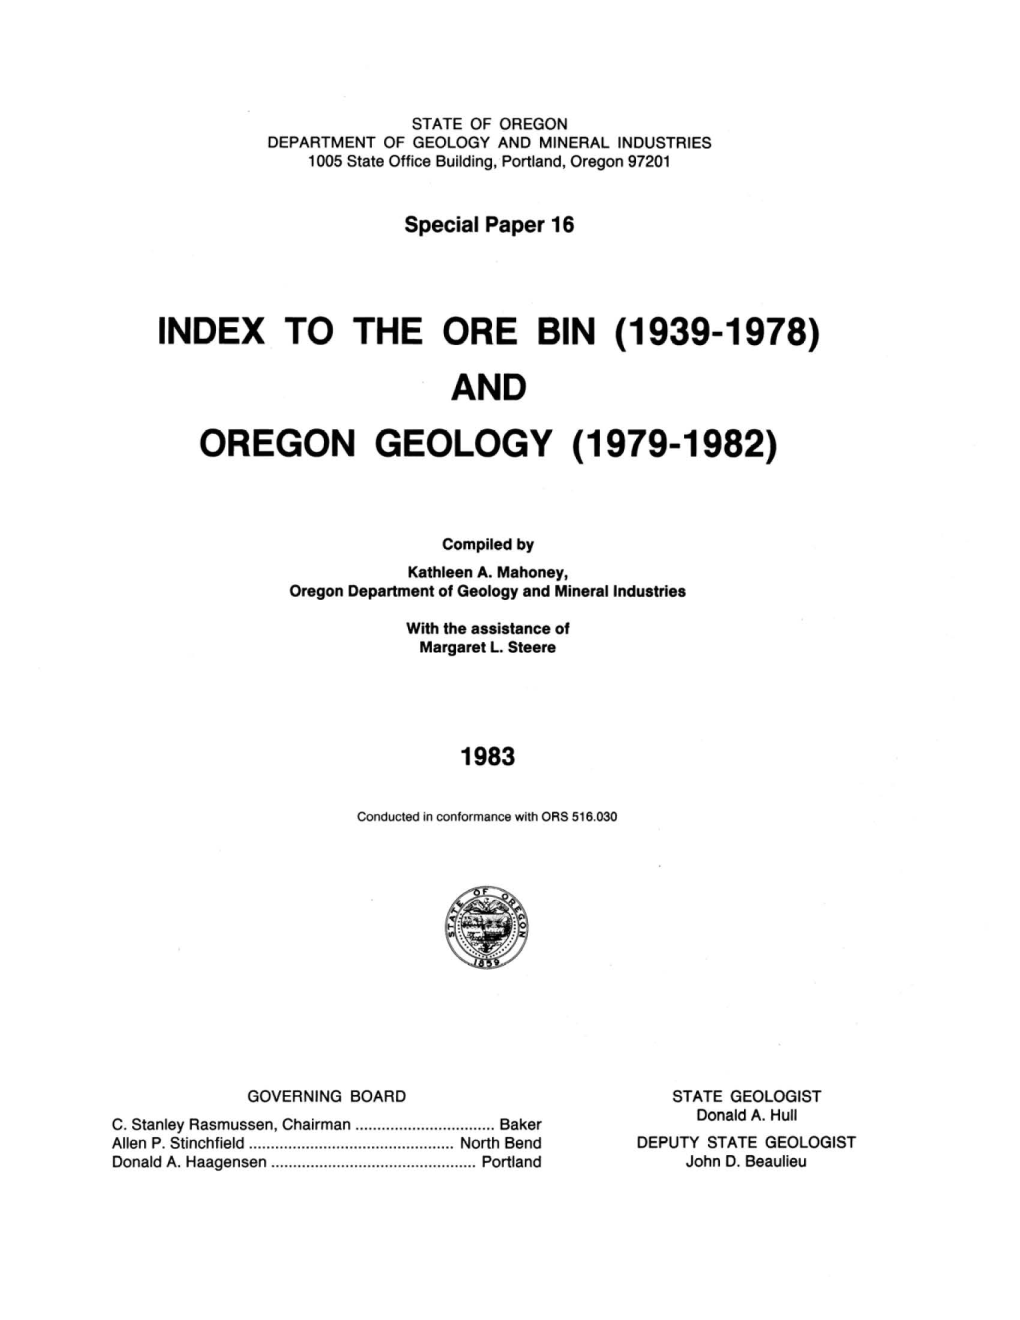 And Oregon Geology (1979-1982)